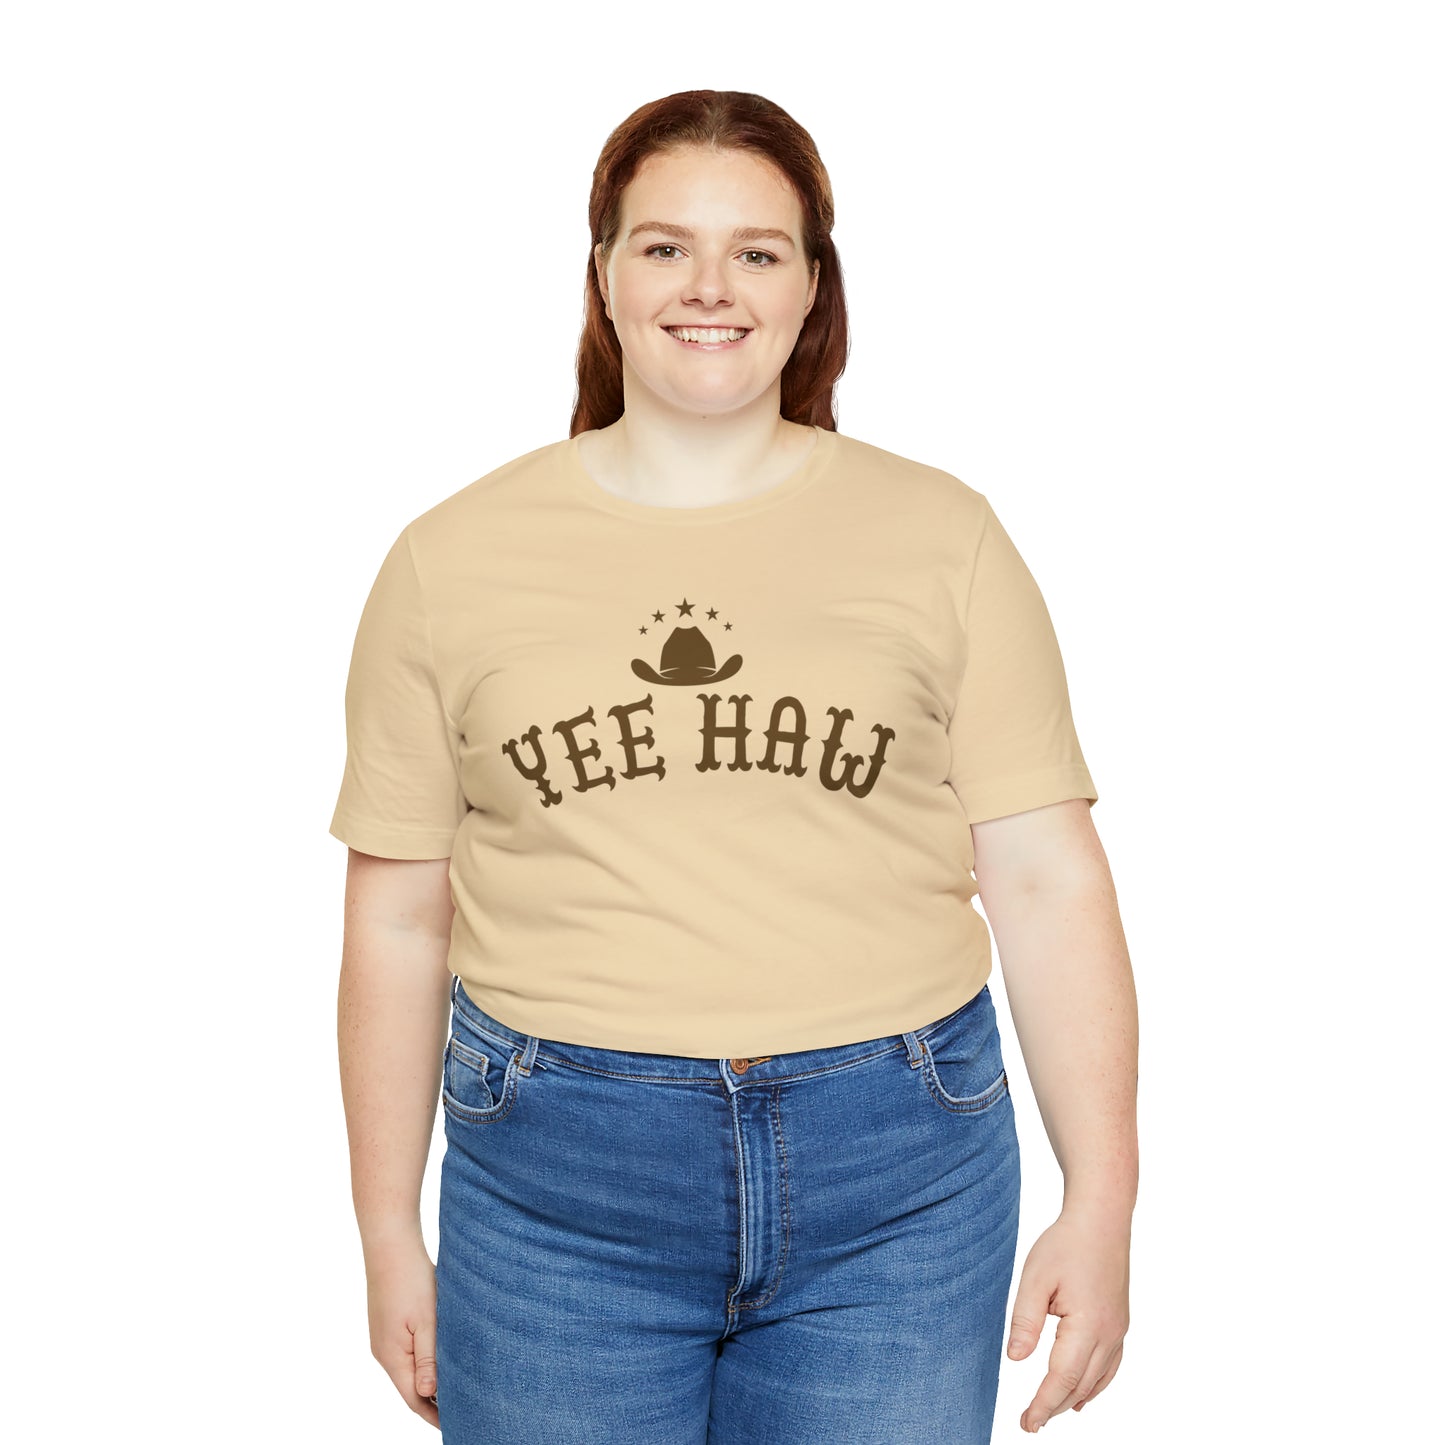 Western Cowgirl Shirt,Vintage Yeehaw Shirt, Howdy Shirt, Cowgirl Shirt,Graphic Yeehaw Shirt, Western Clothing, T485